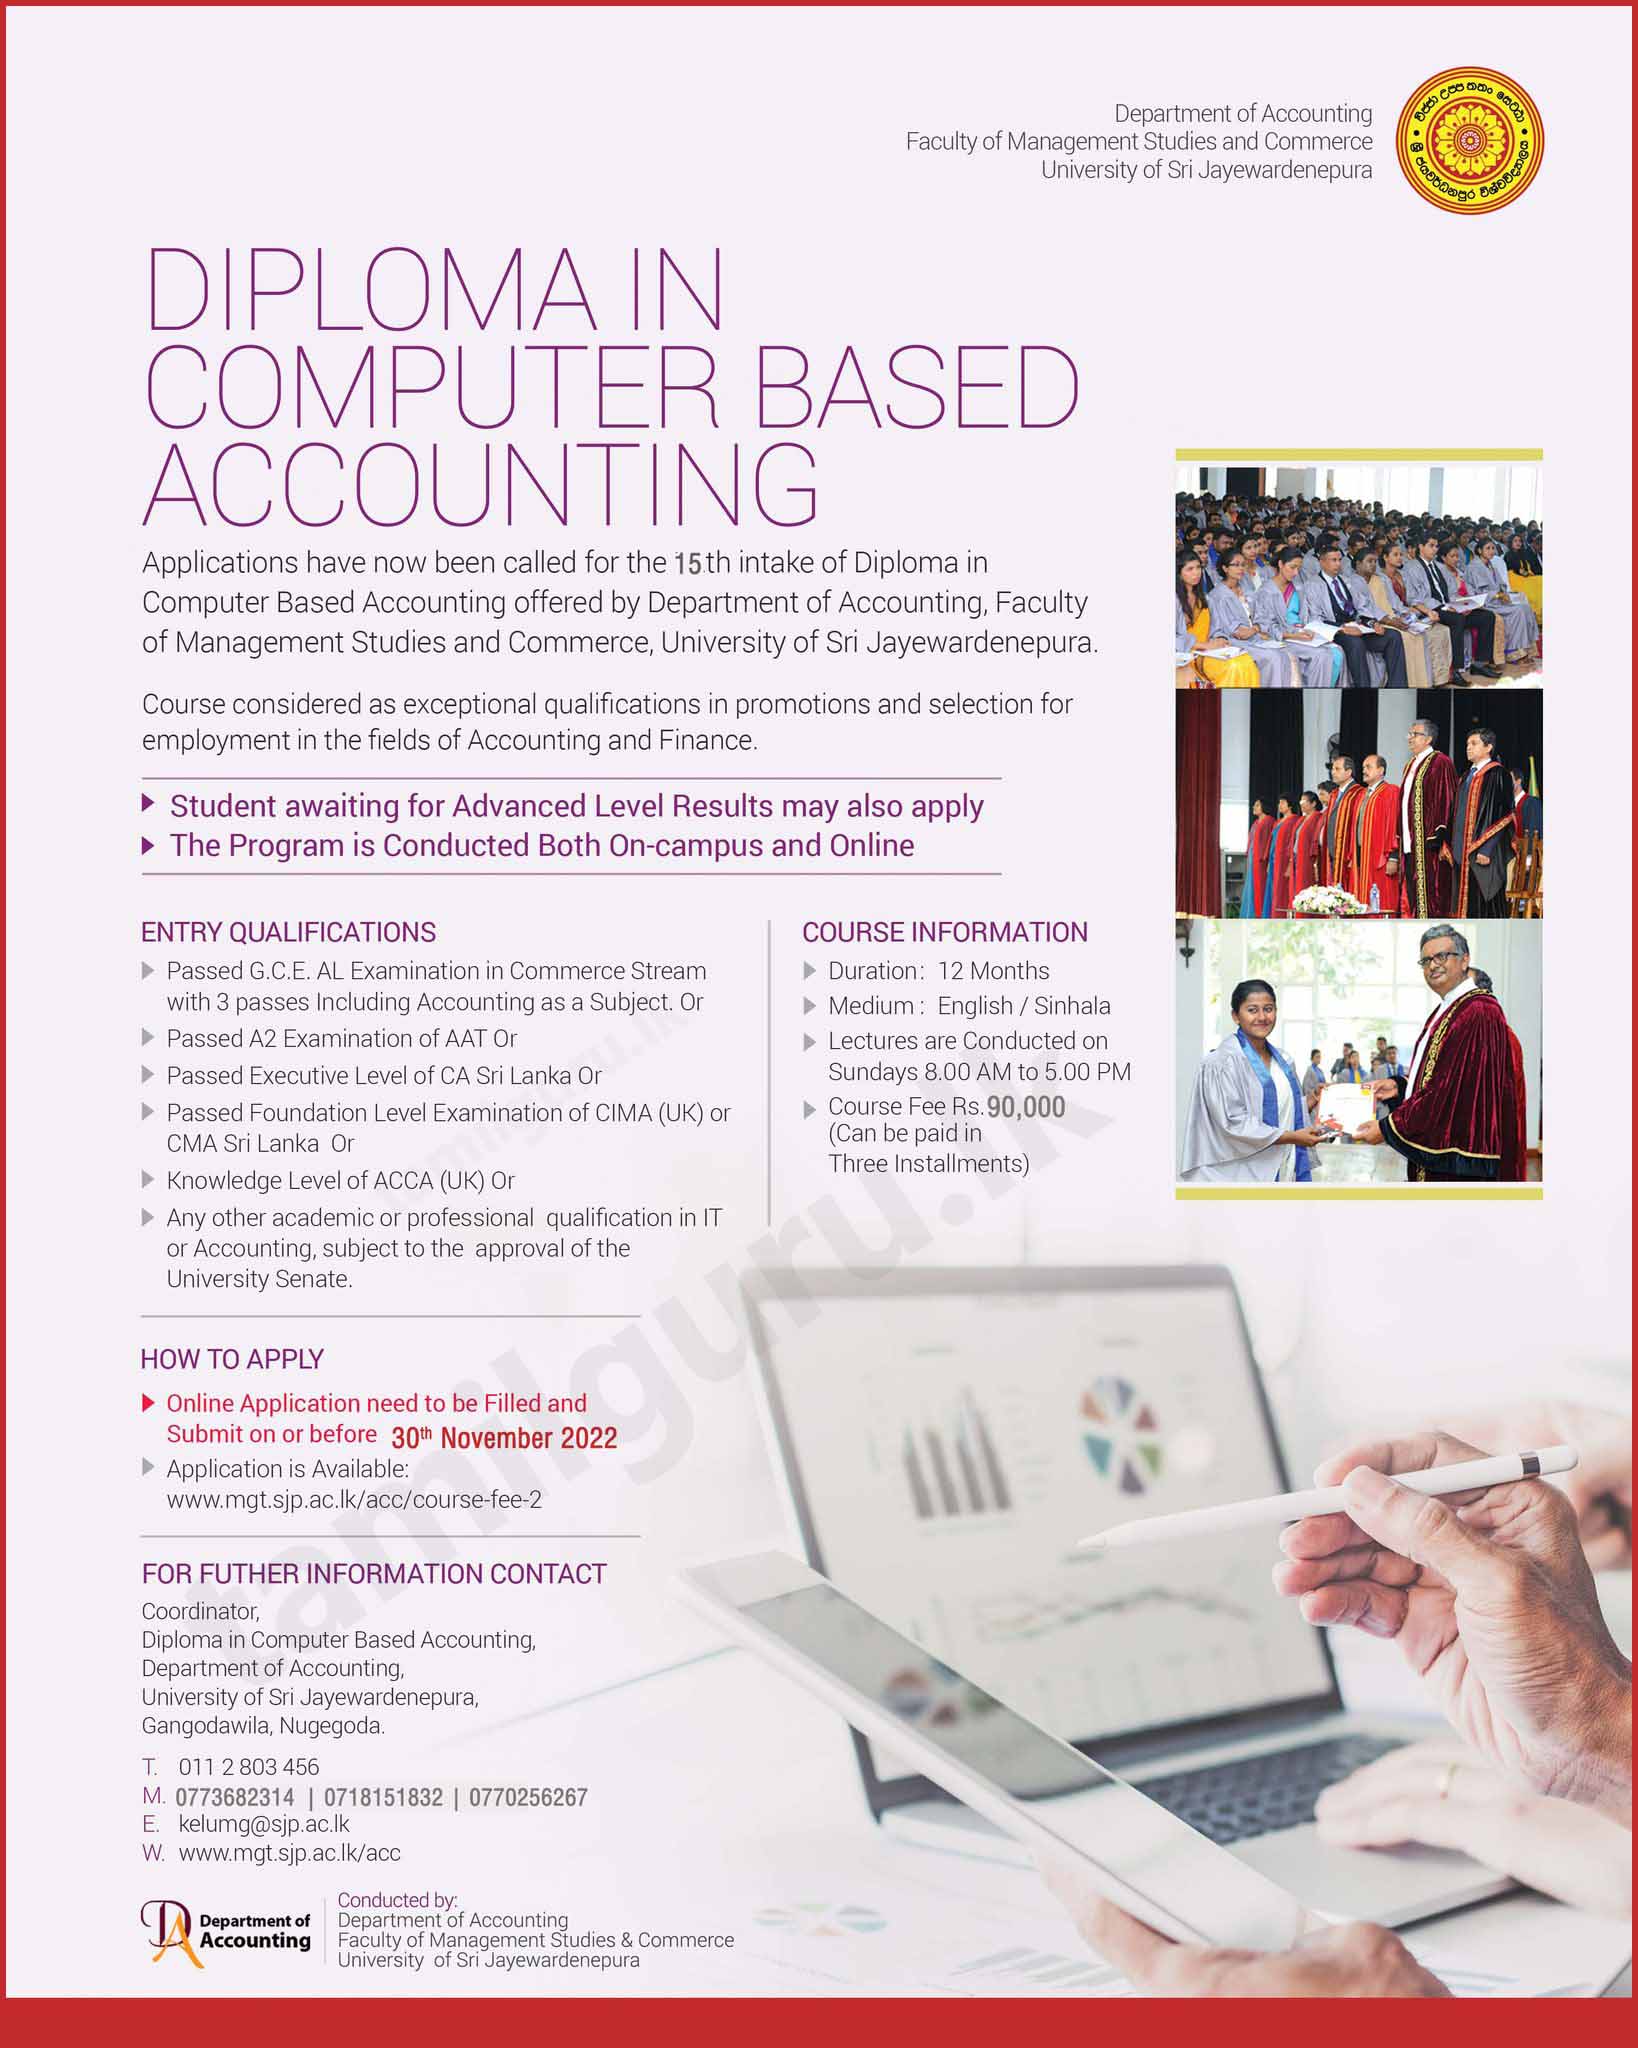 Diploma in Computer Based Accounting Application 2022 - University of Sri Jayewardenepura